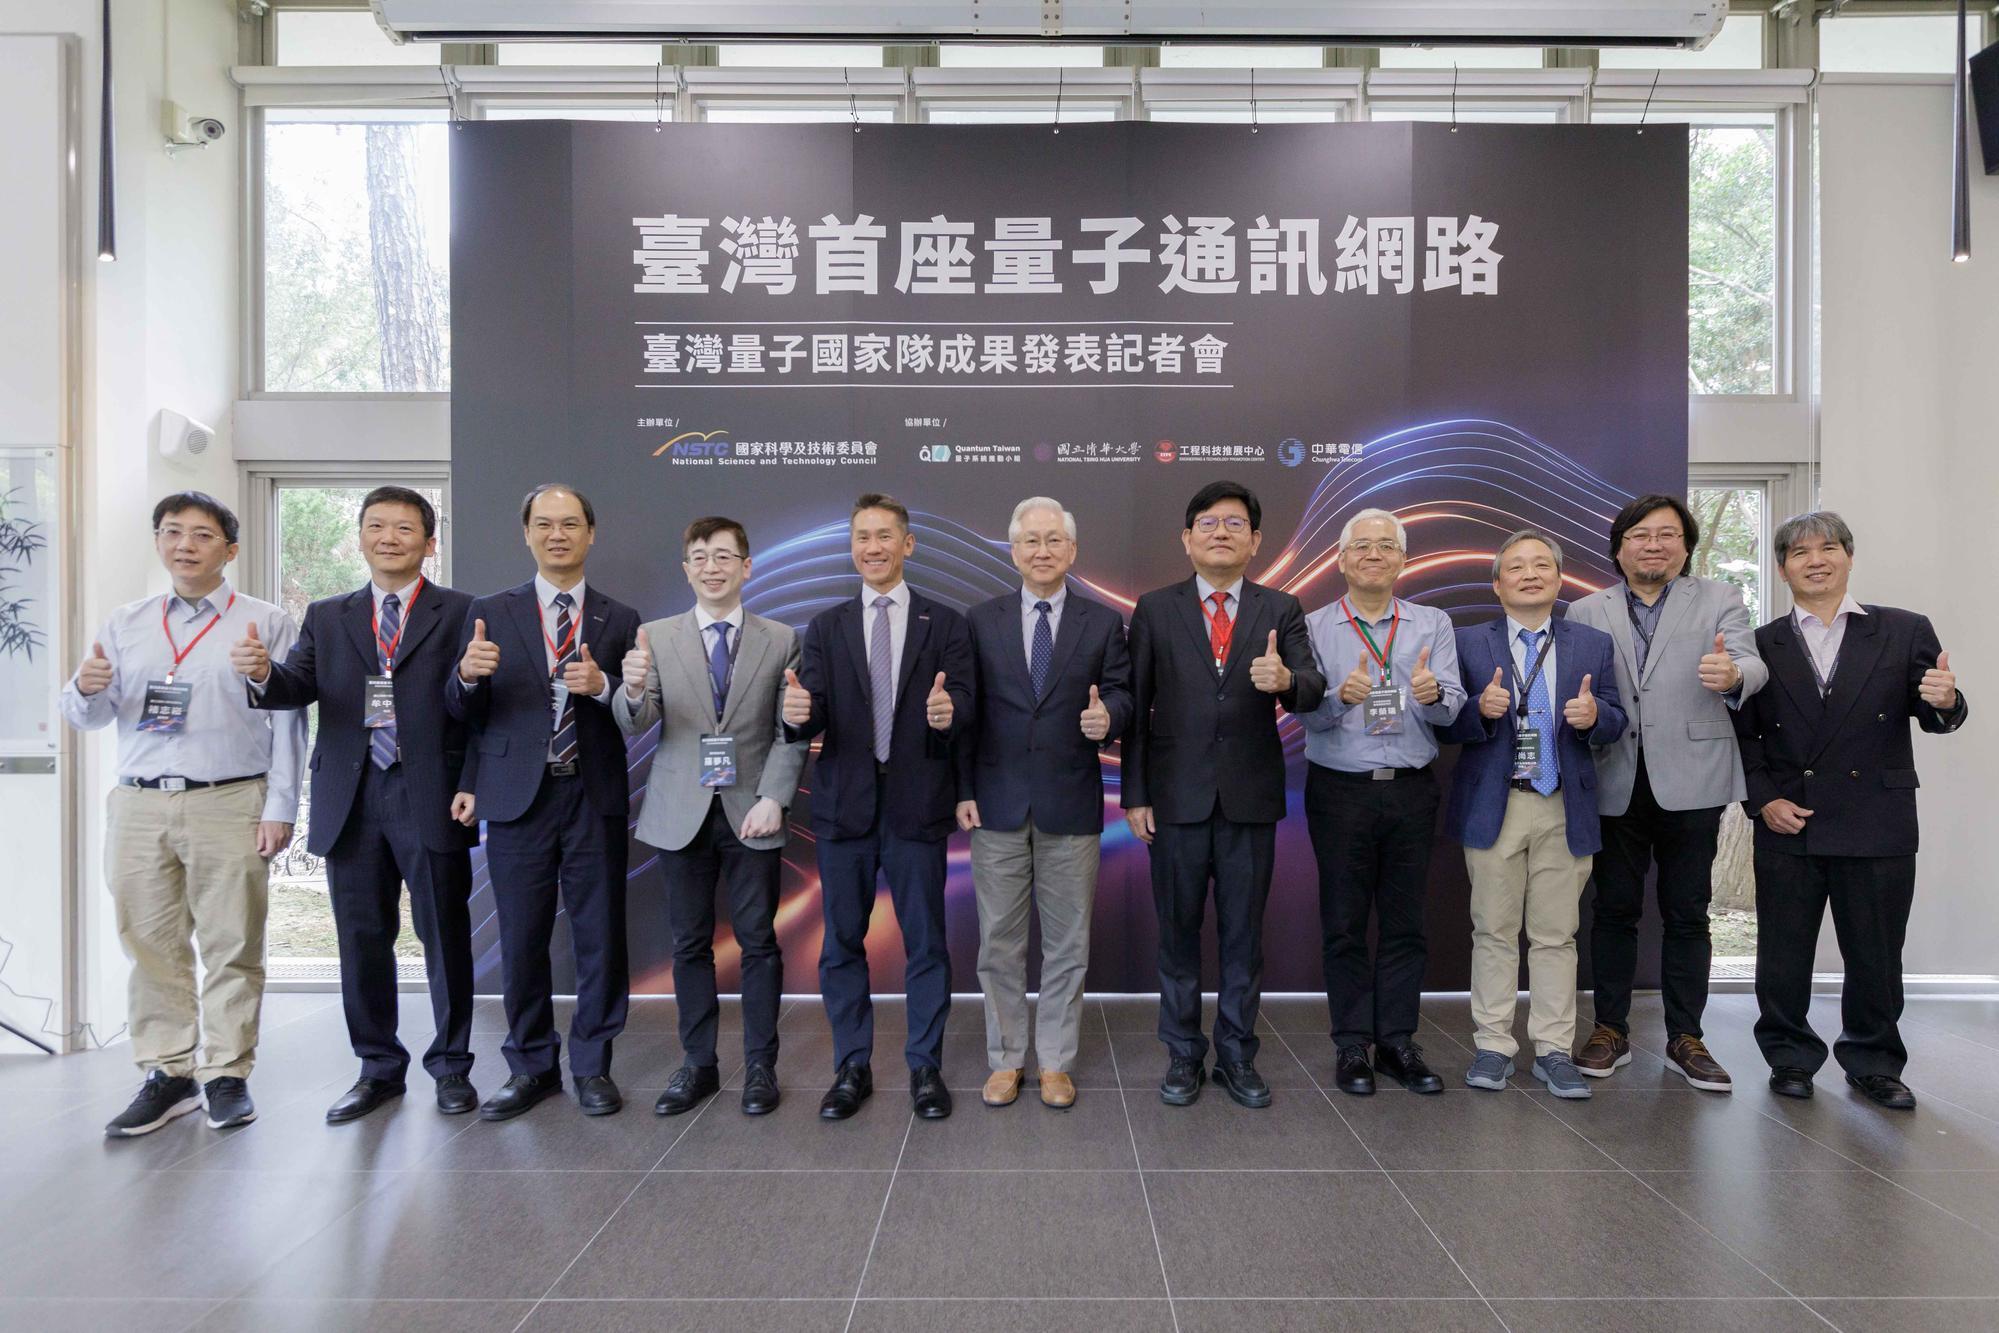 國科會與清華大學召開記者會，宣布成功研發台灣第一個量子加密通訊網路。
The NSTC and NTHU recently held a press conference announcing the successful development of Taiwan's first quantum secure communication network.